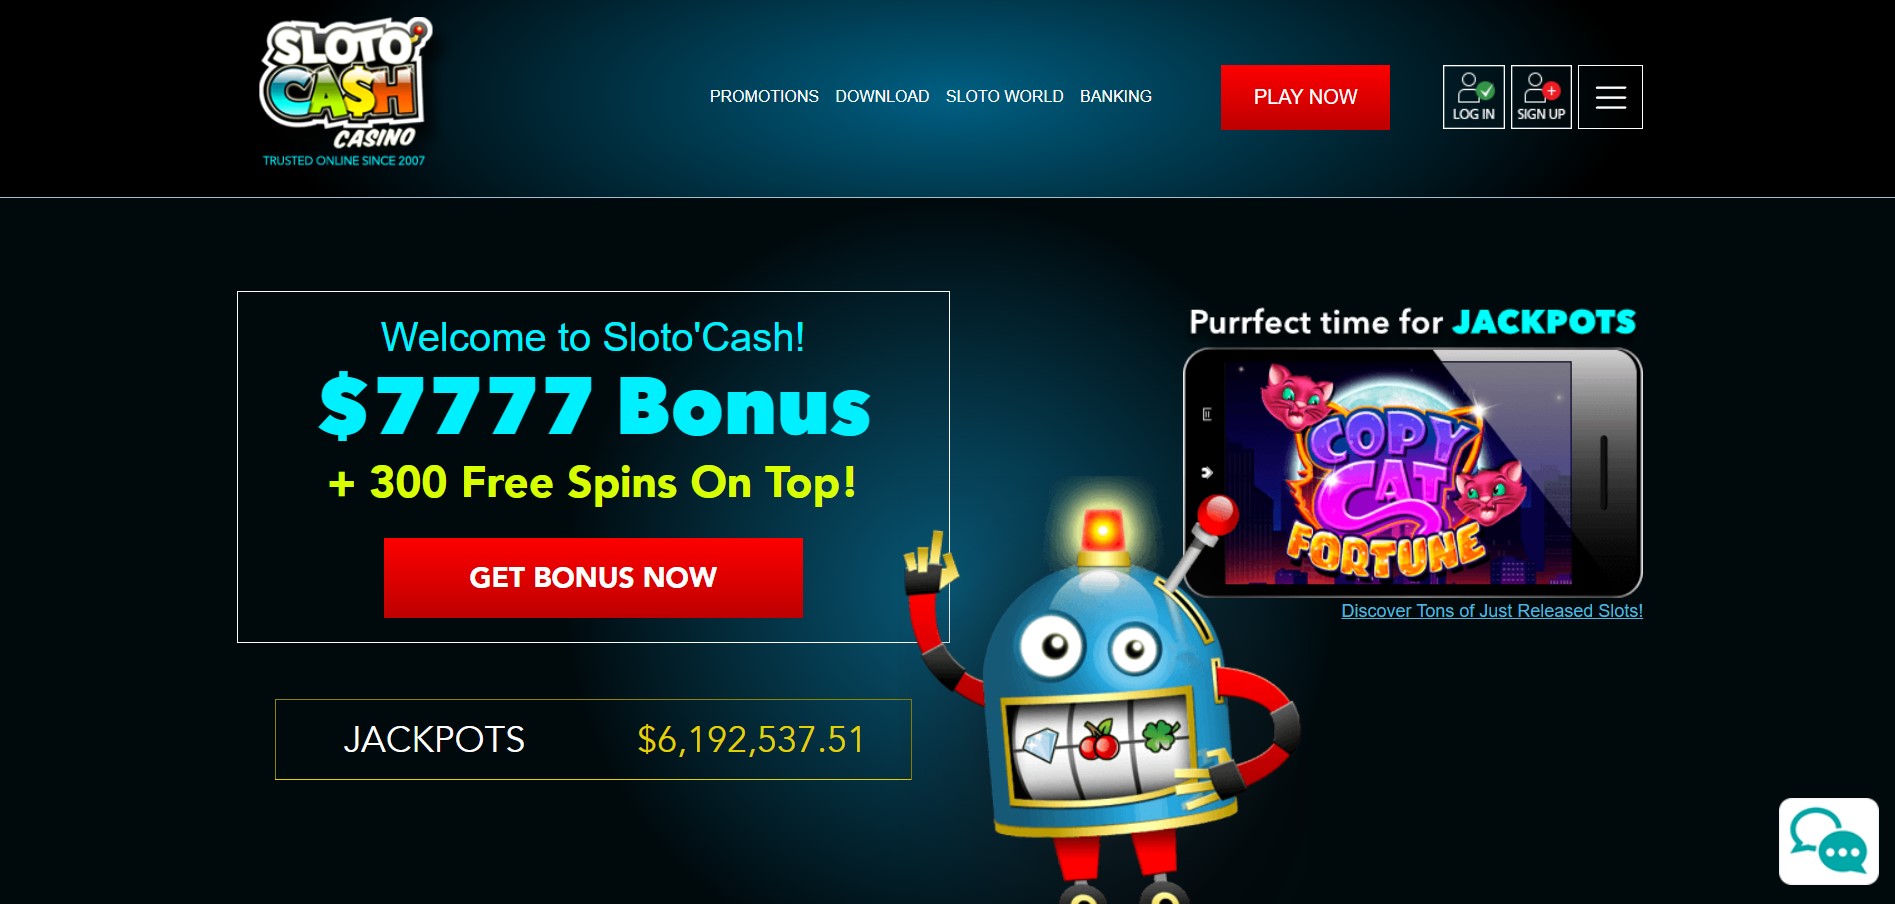 Sloto Cash online casino review